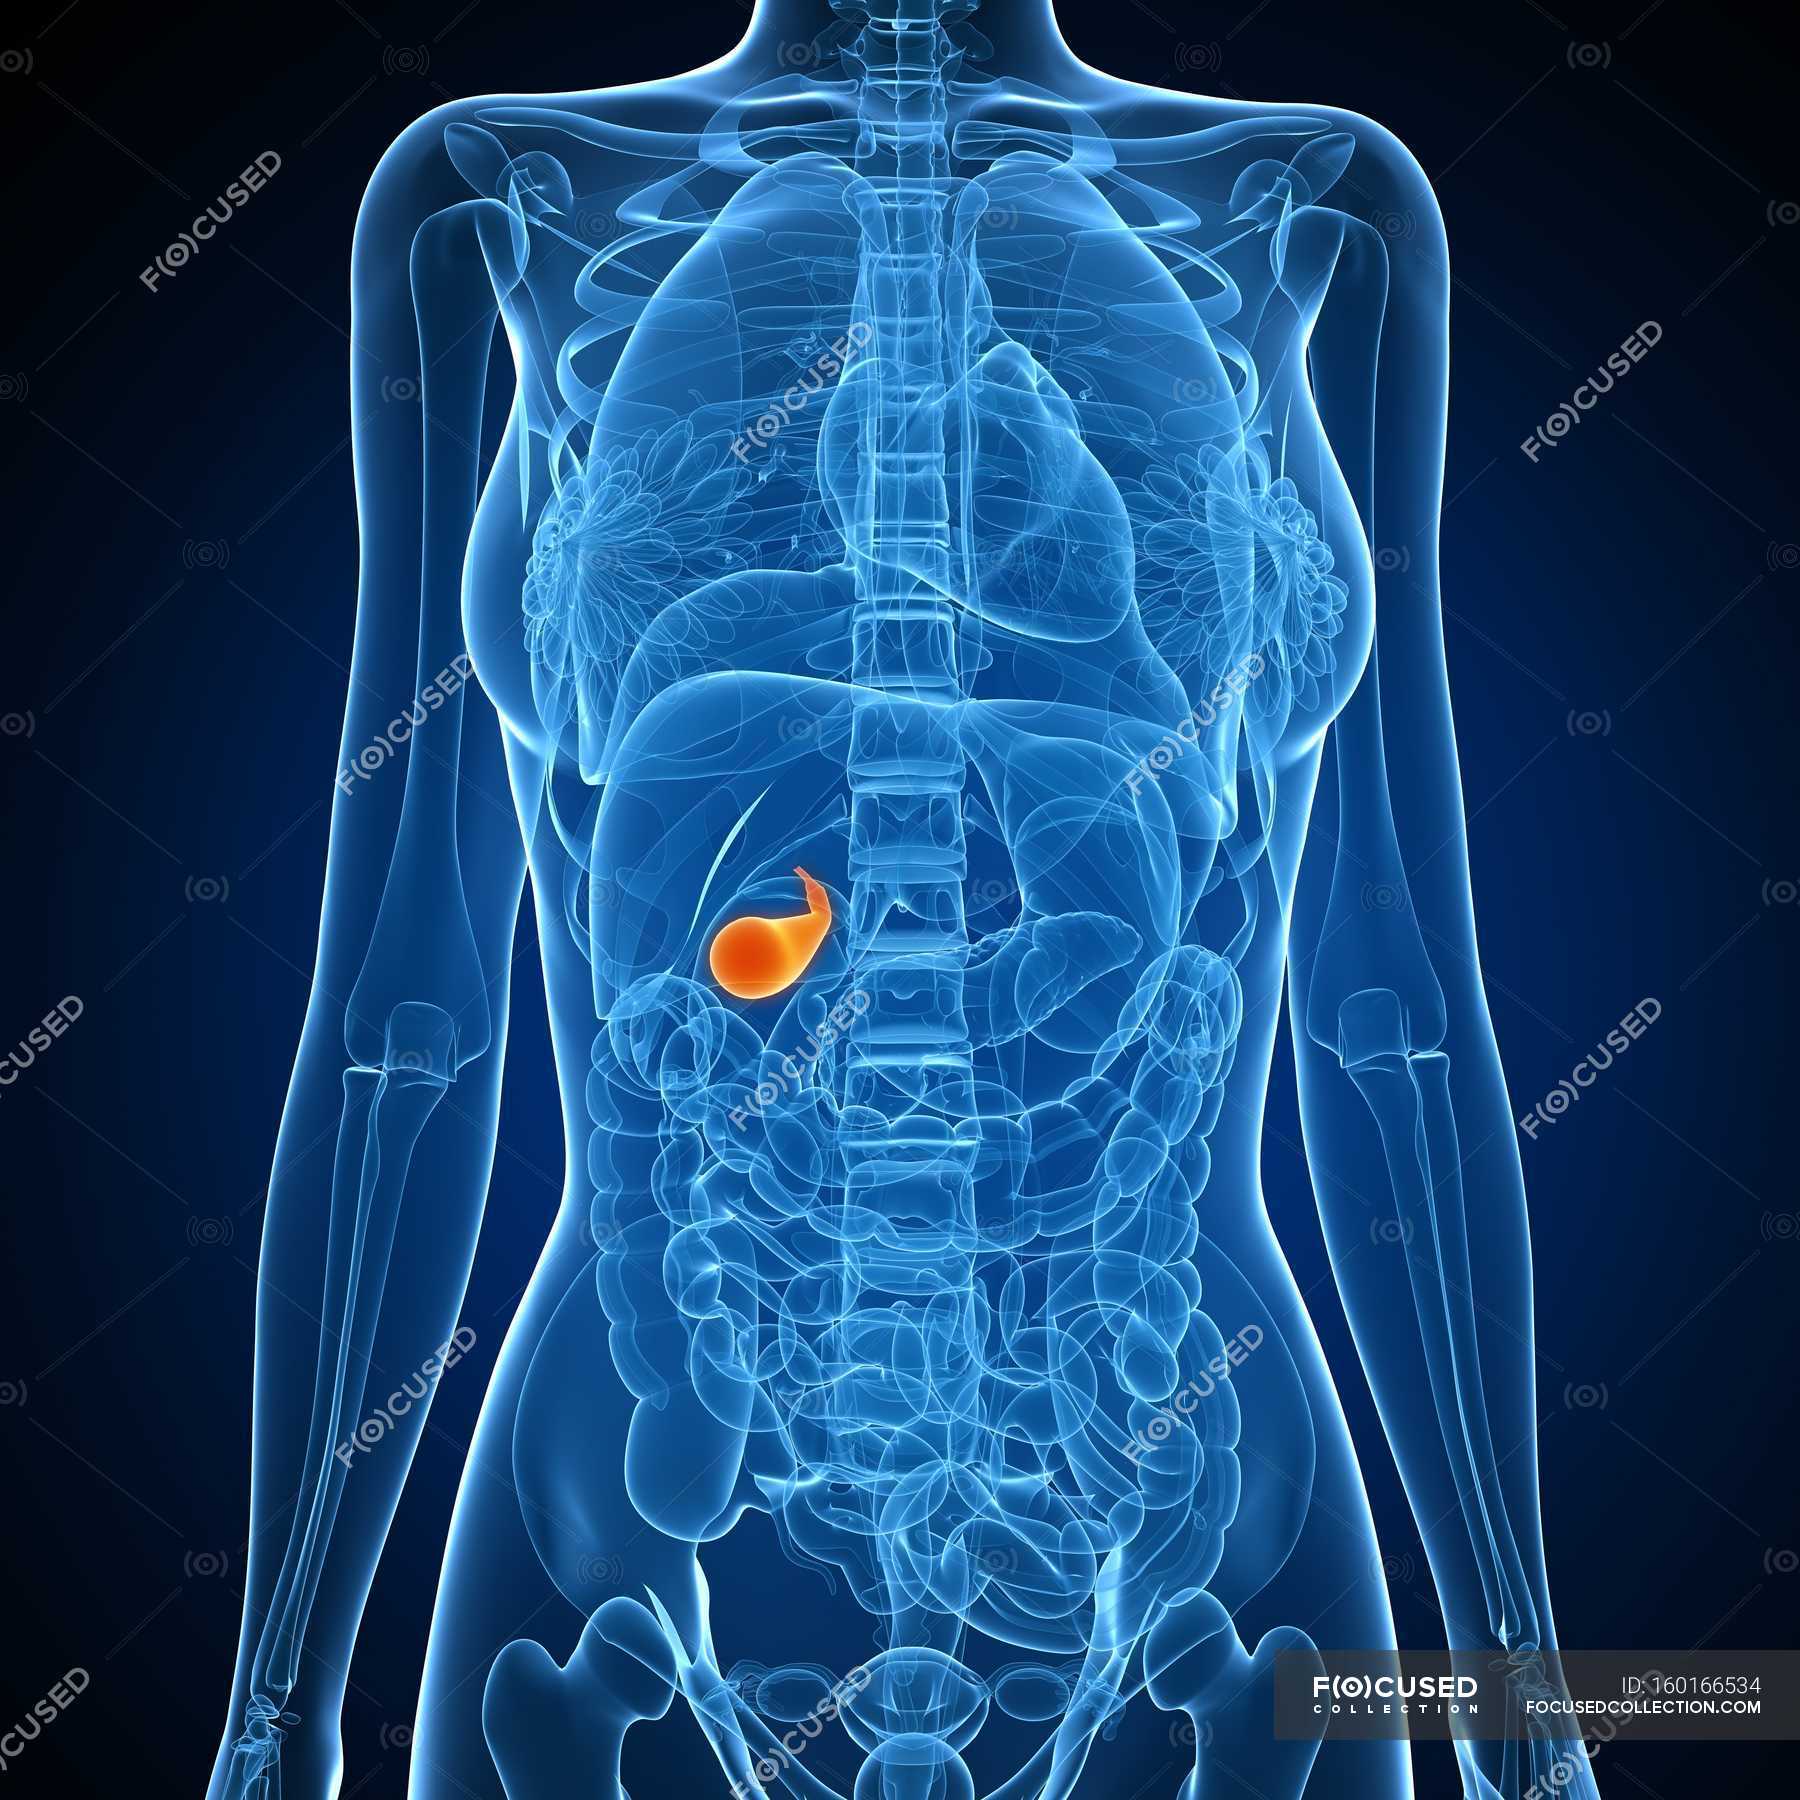 Healthy gallbladder anatomy — normal, gall bladder - Stock Photo ...